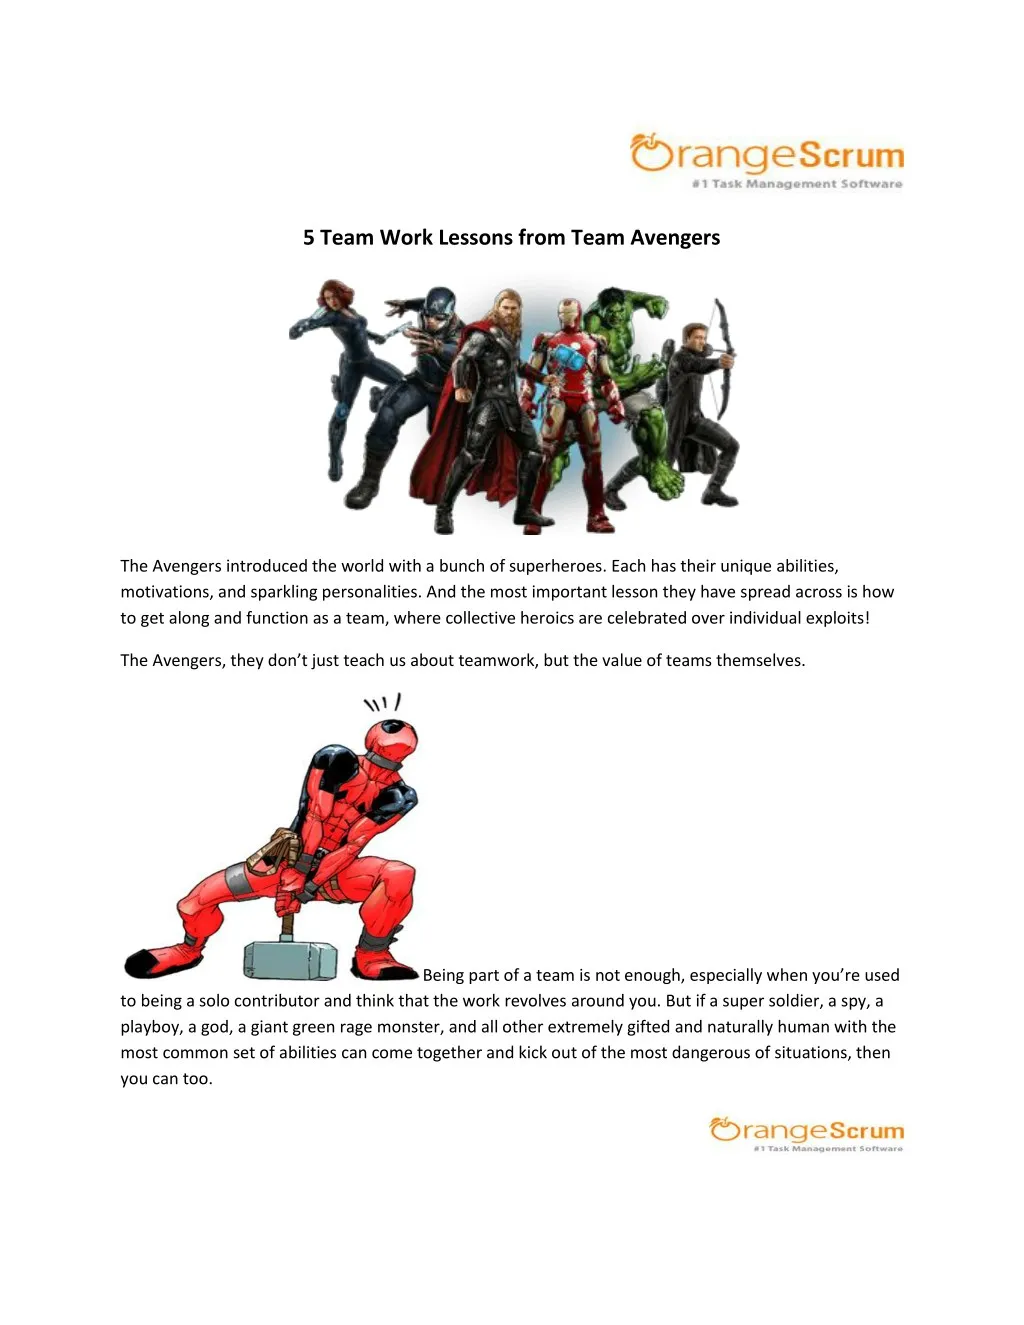 5 team work lessons from team avengers